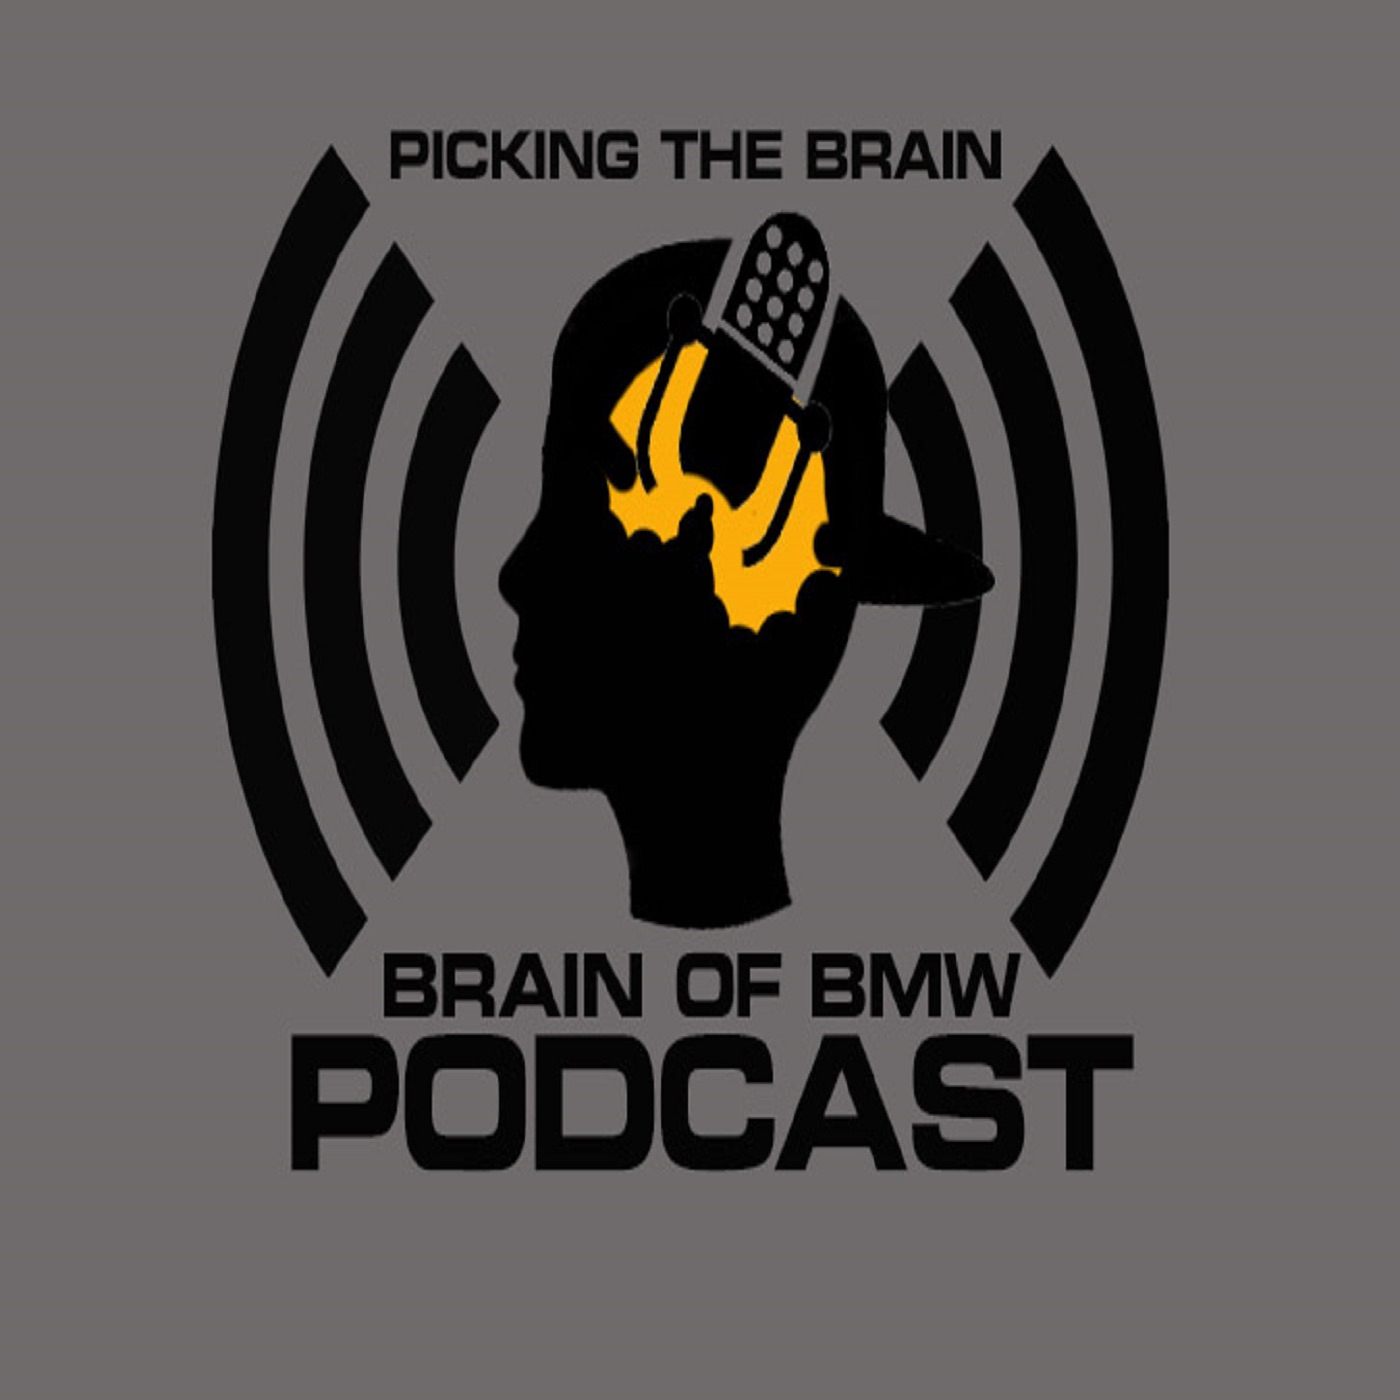 Play podcast bmw #6